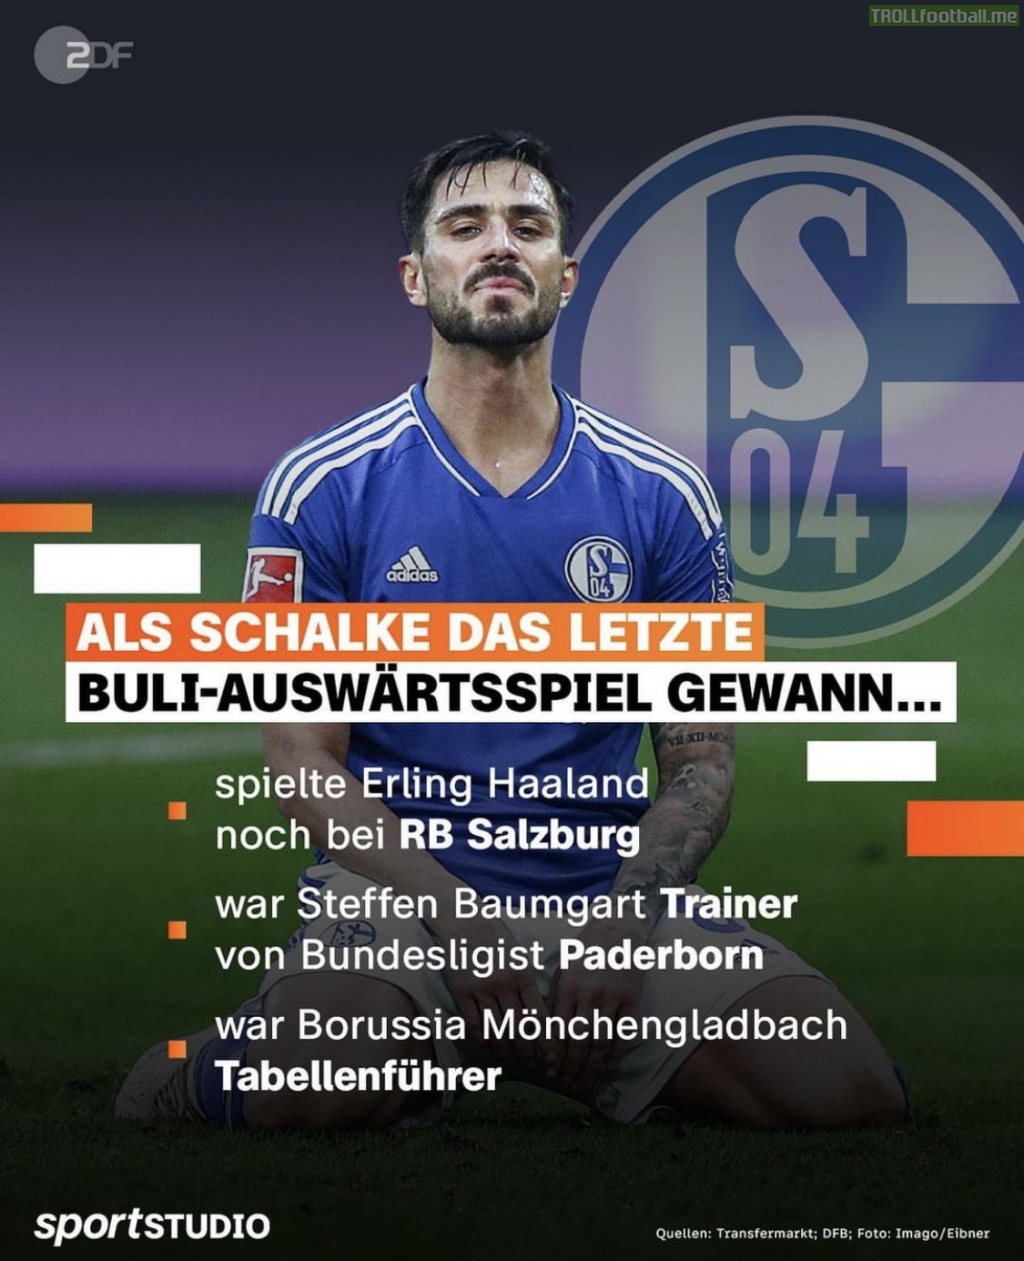 [Sportstudio] The last time Schalke won an away game in the Bundesliga, Erling Haaland was still playing for RB Salzburg